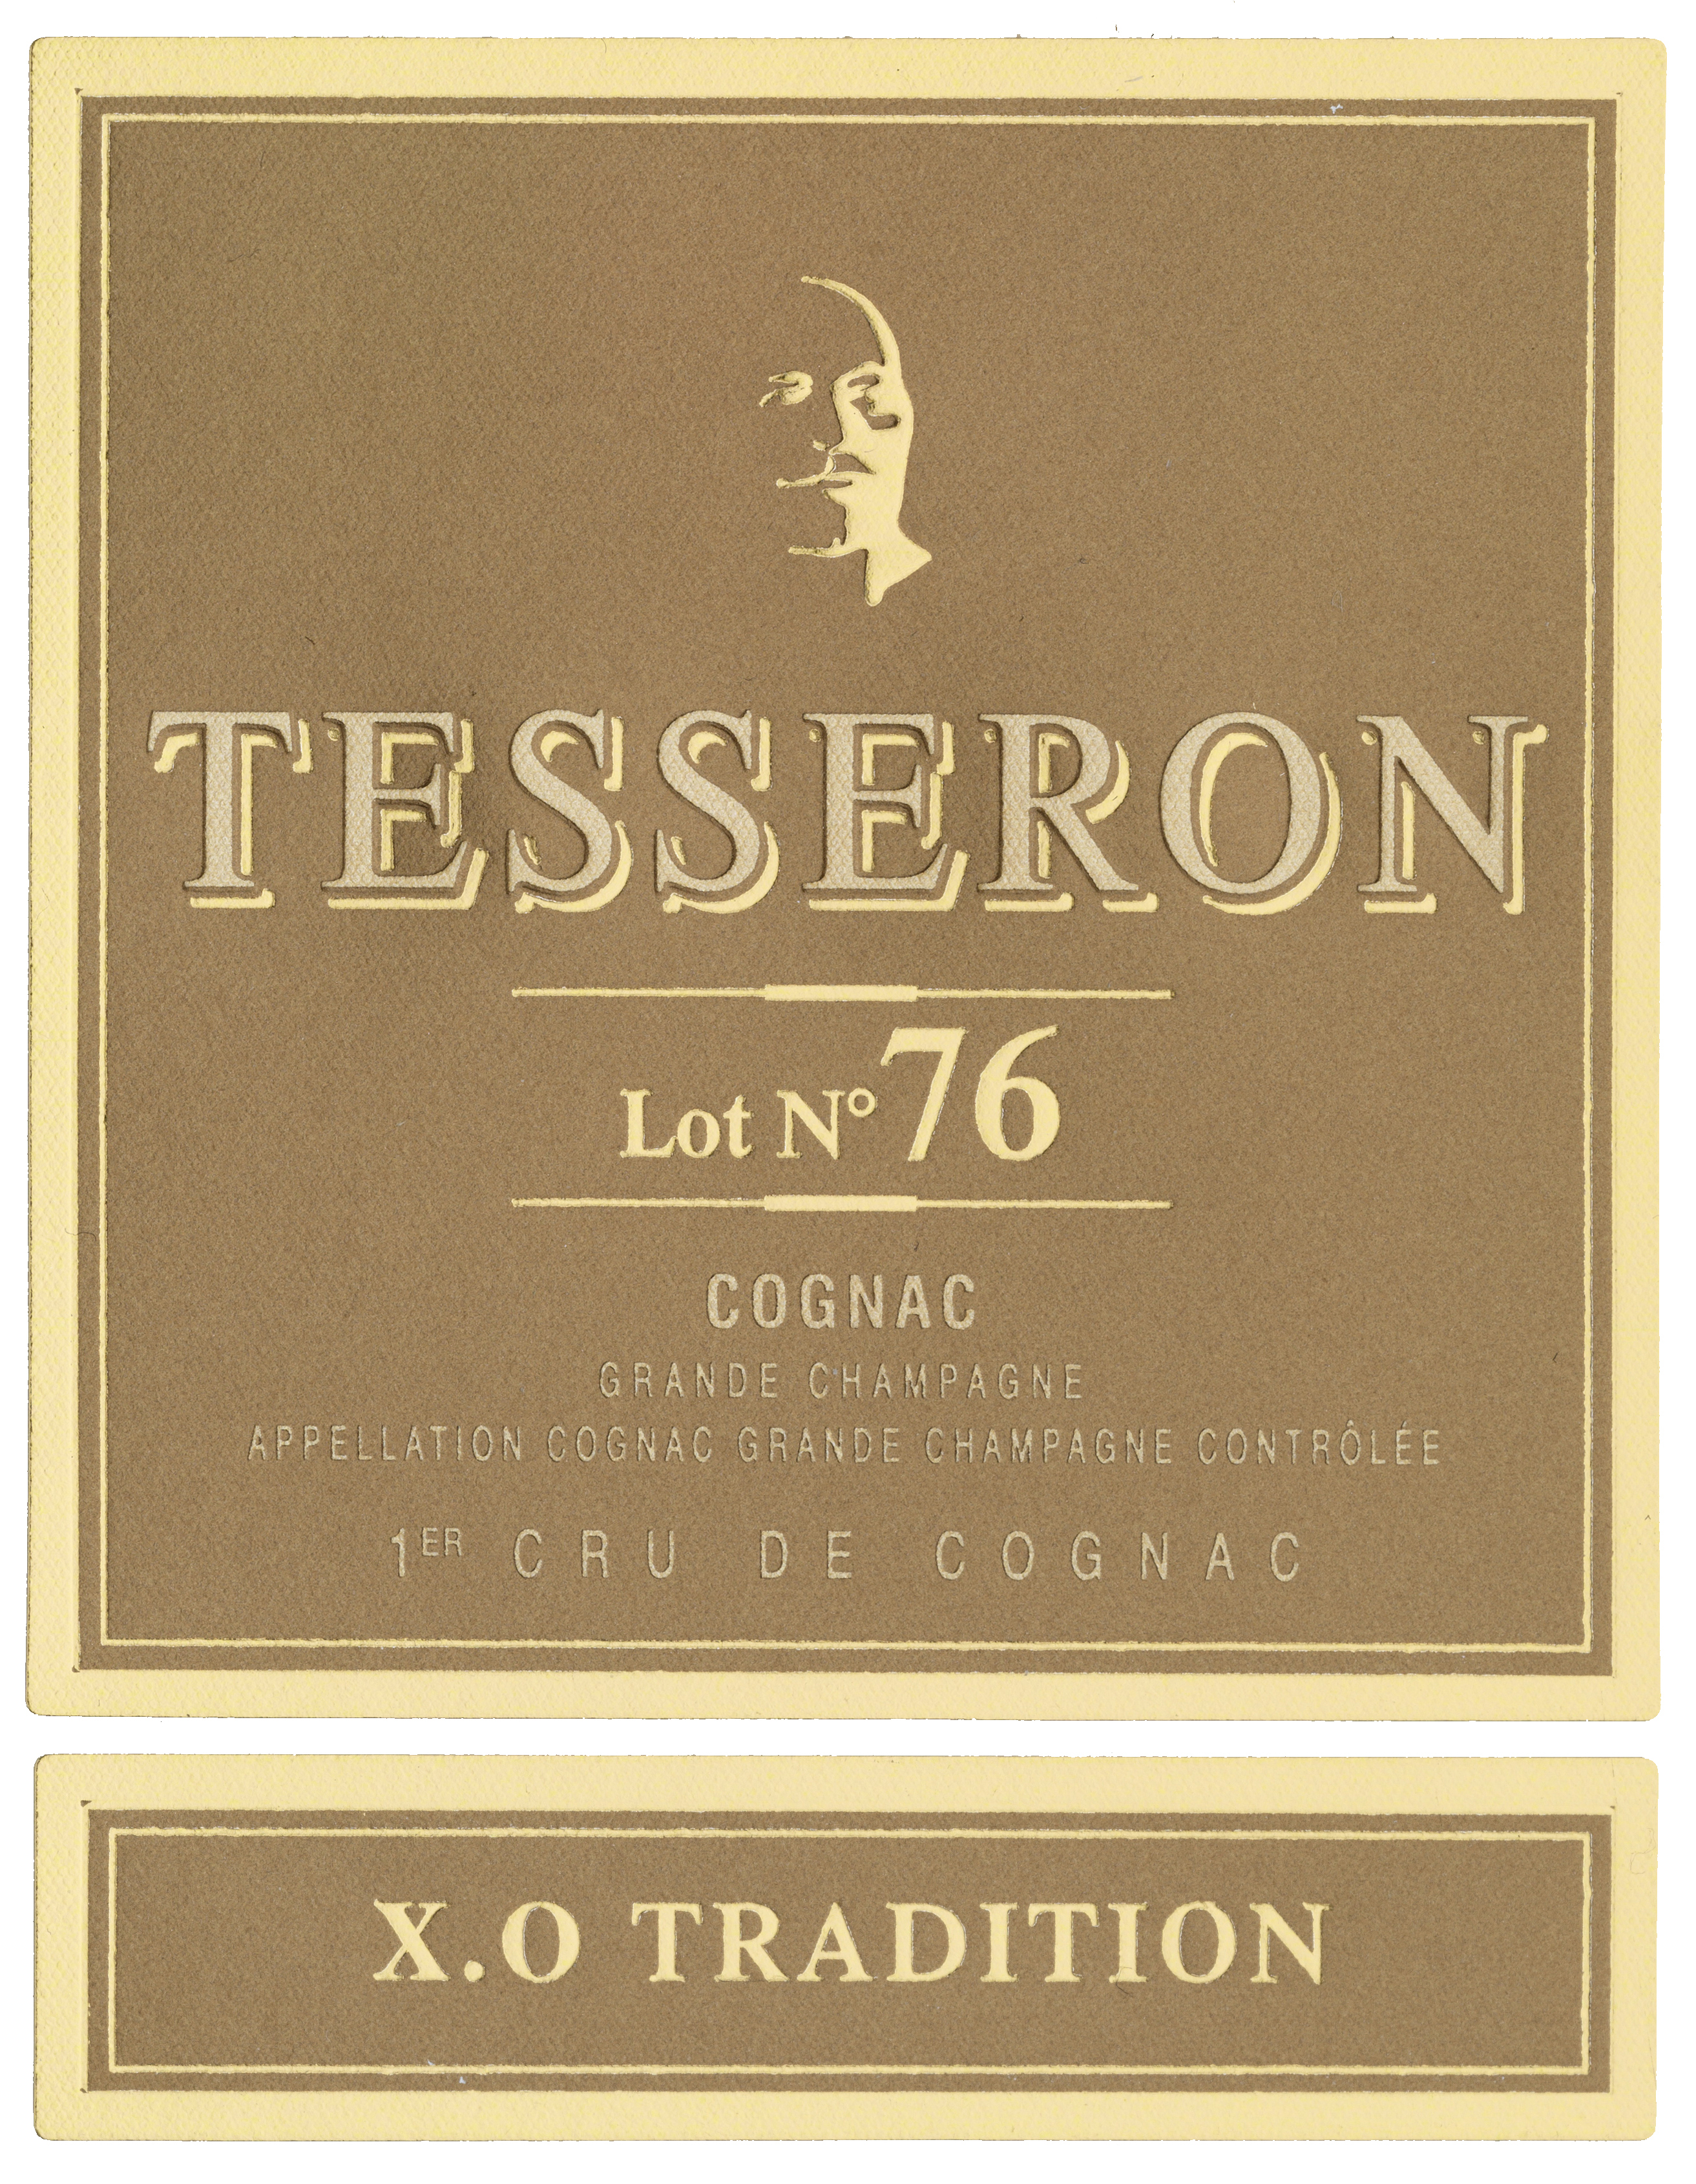 Cognac Tesseron - X.O Tradition - Lot 76 label